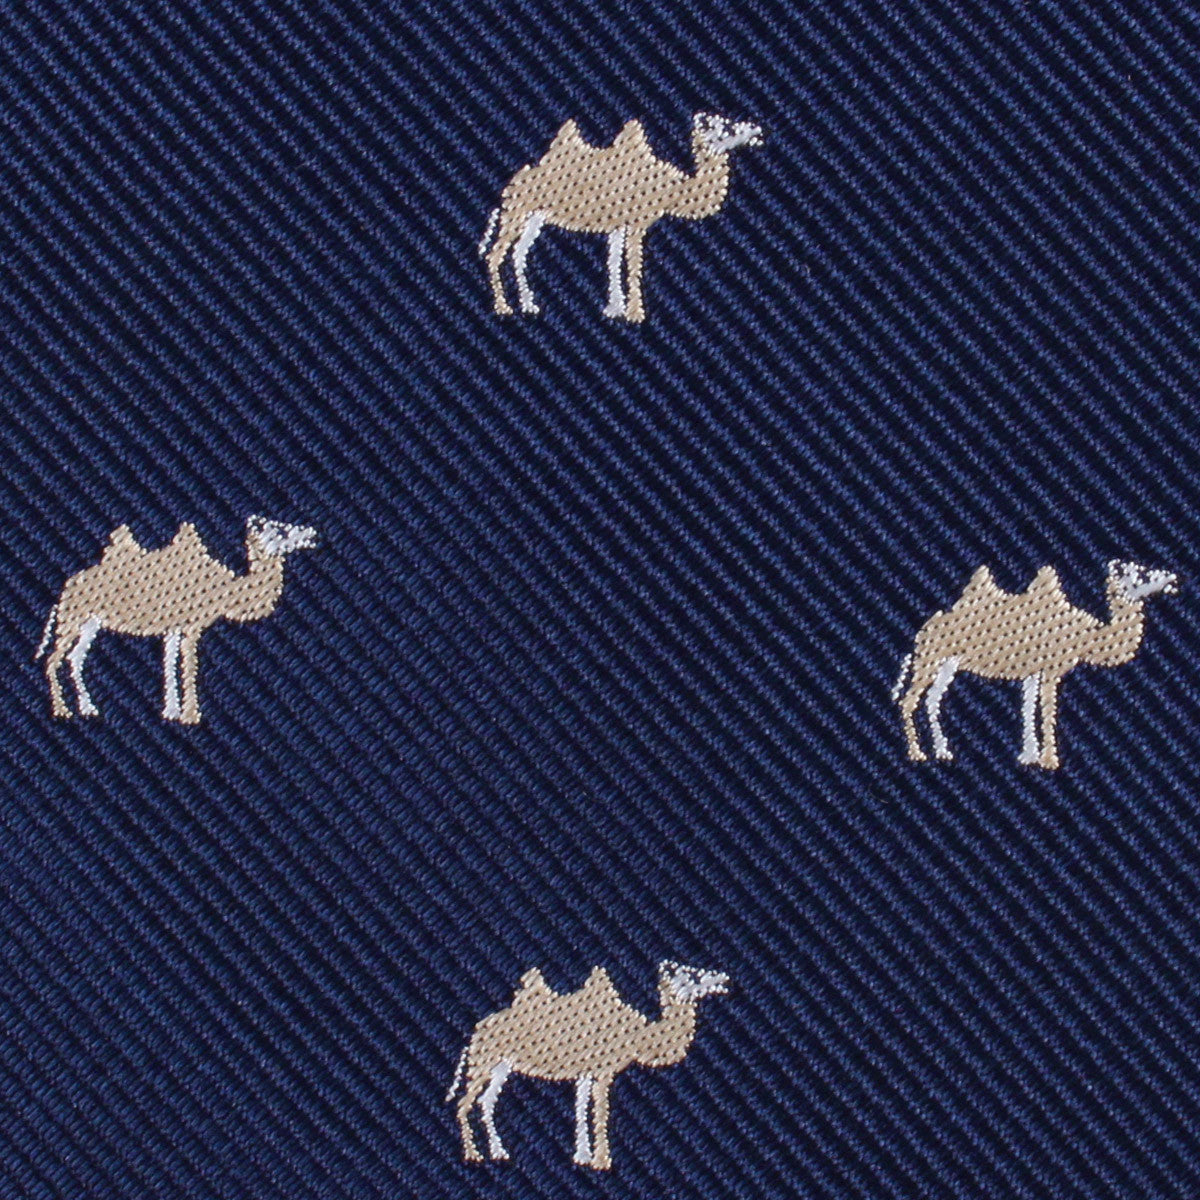 Mongolian Camel Fabric Pocket Square